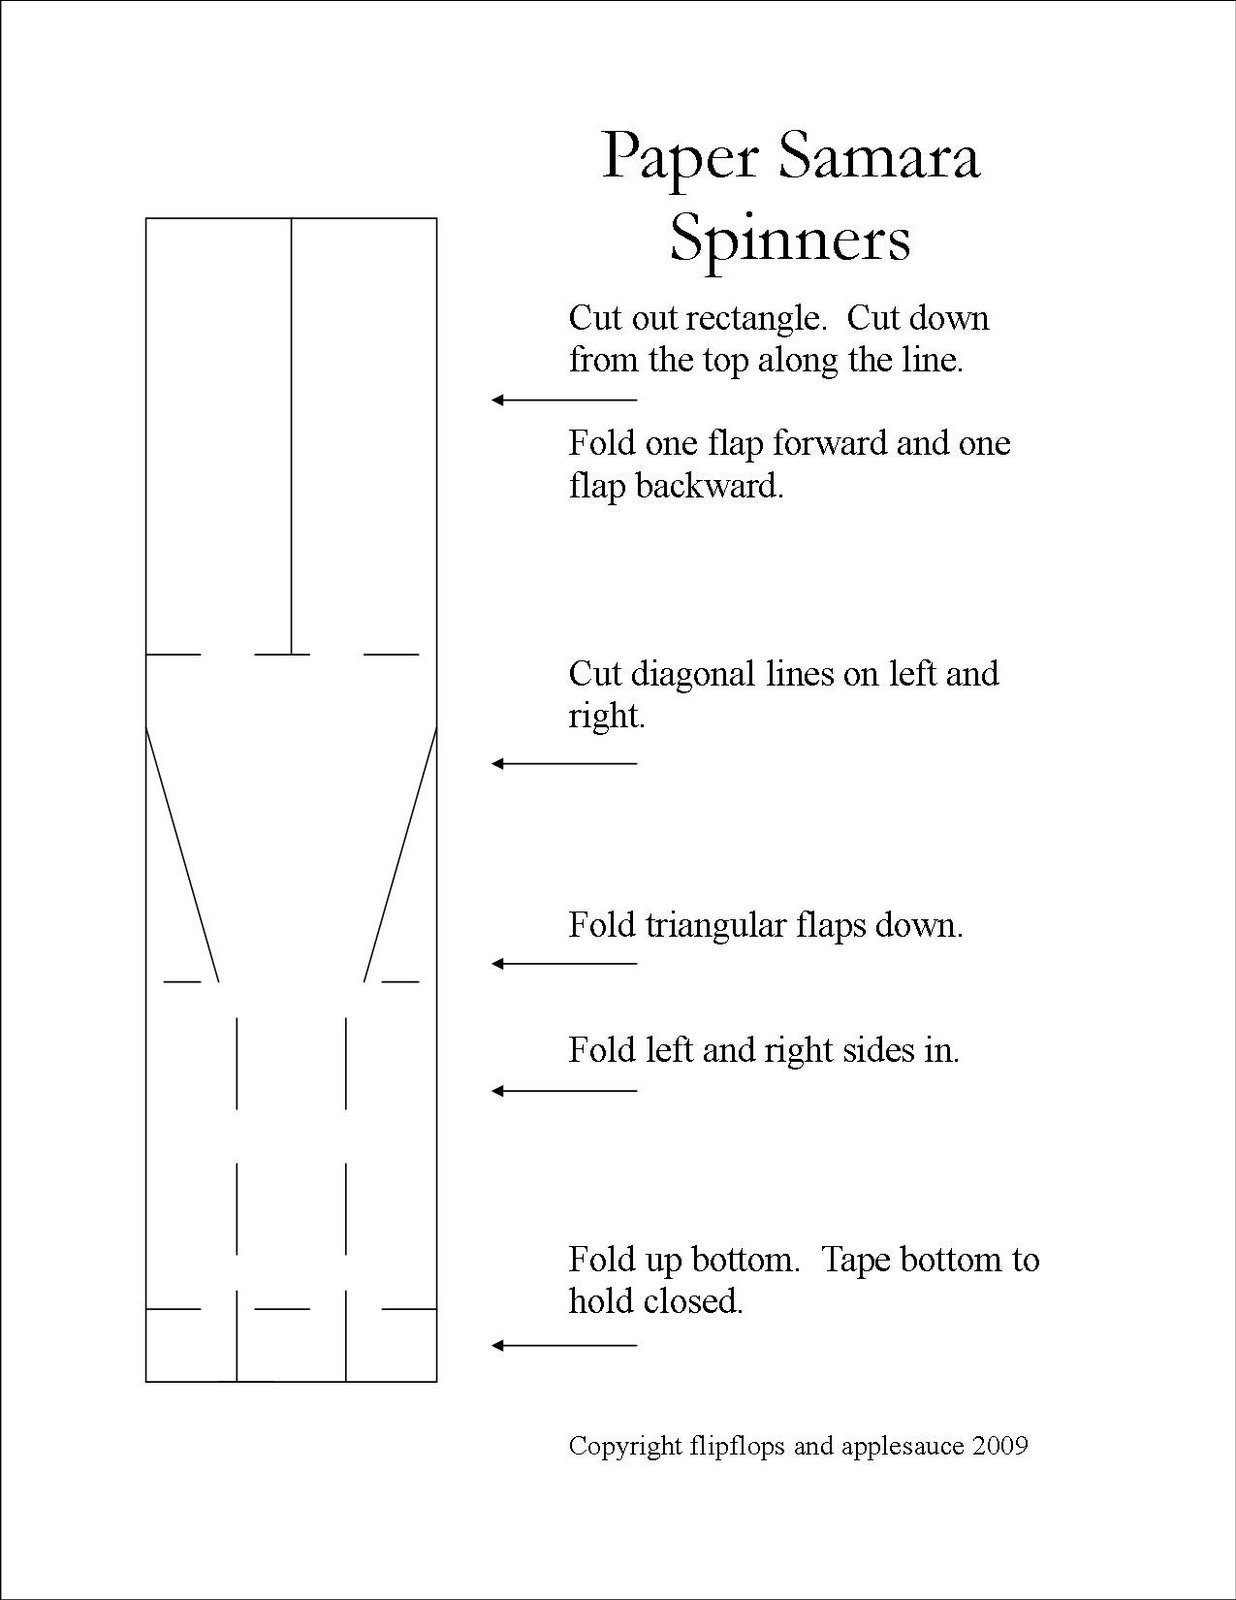 [Paper+samara+spinners.jpg]